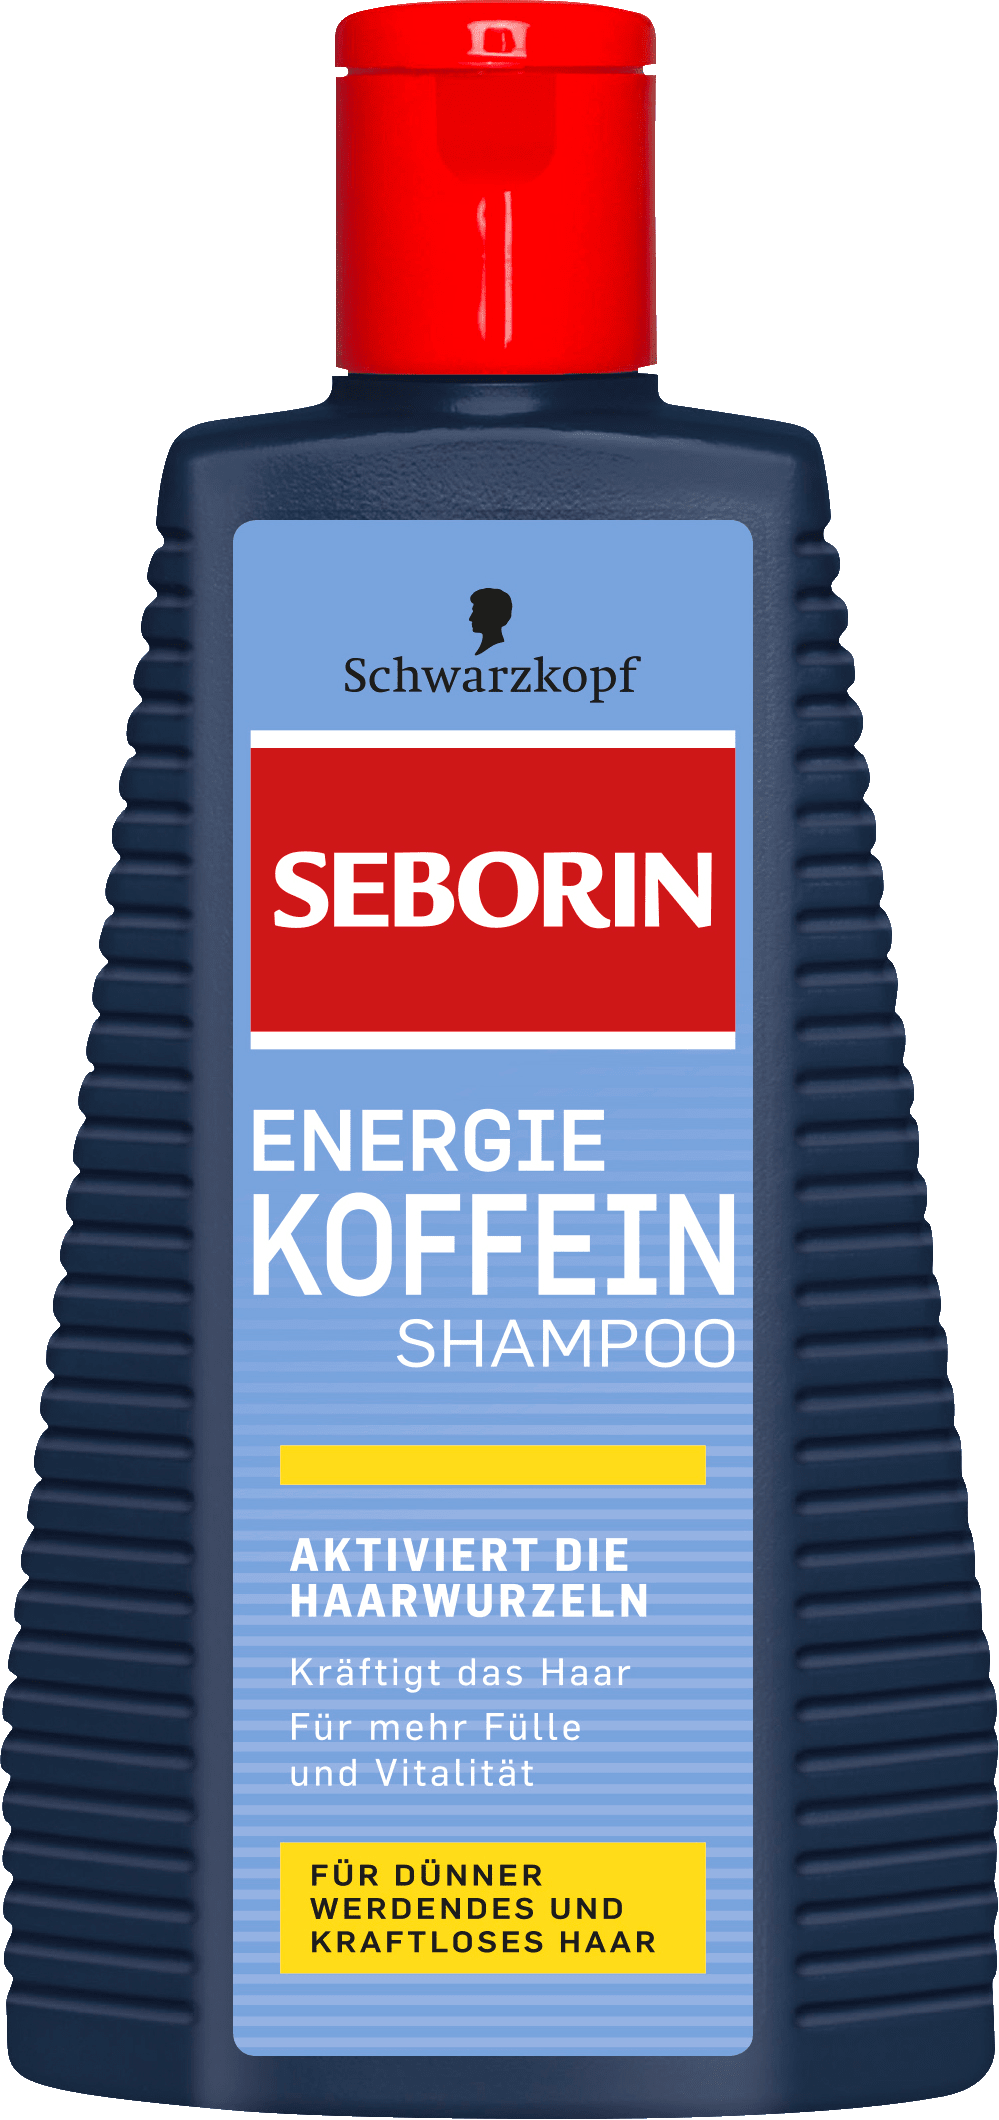 Schwarzkopf Shampoo Power Of Caffeine, 250 Ml